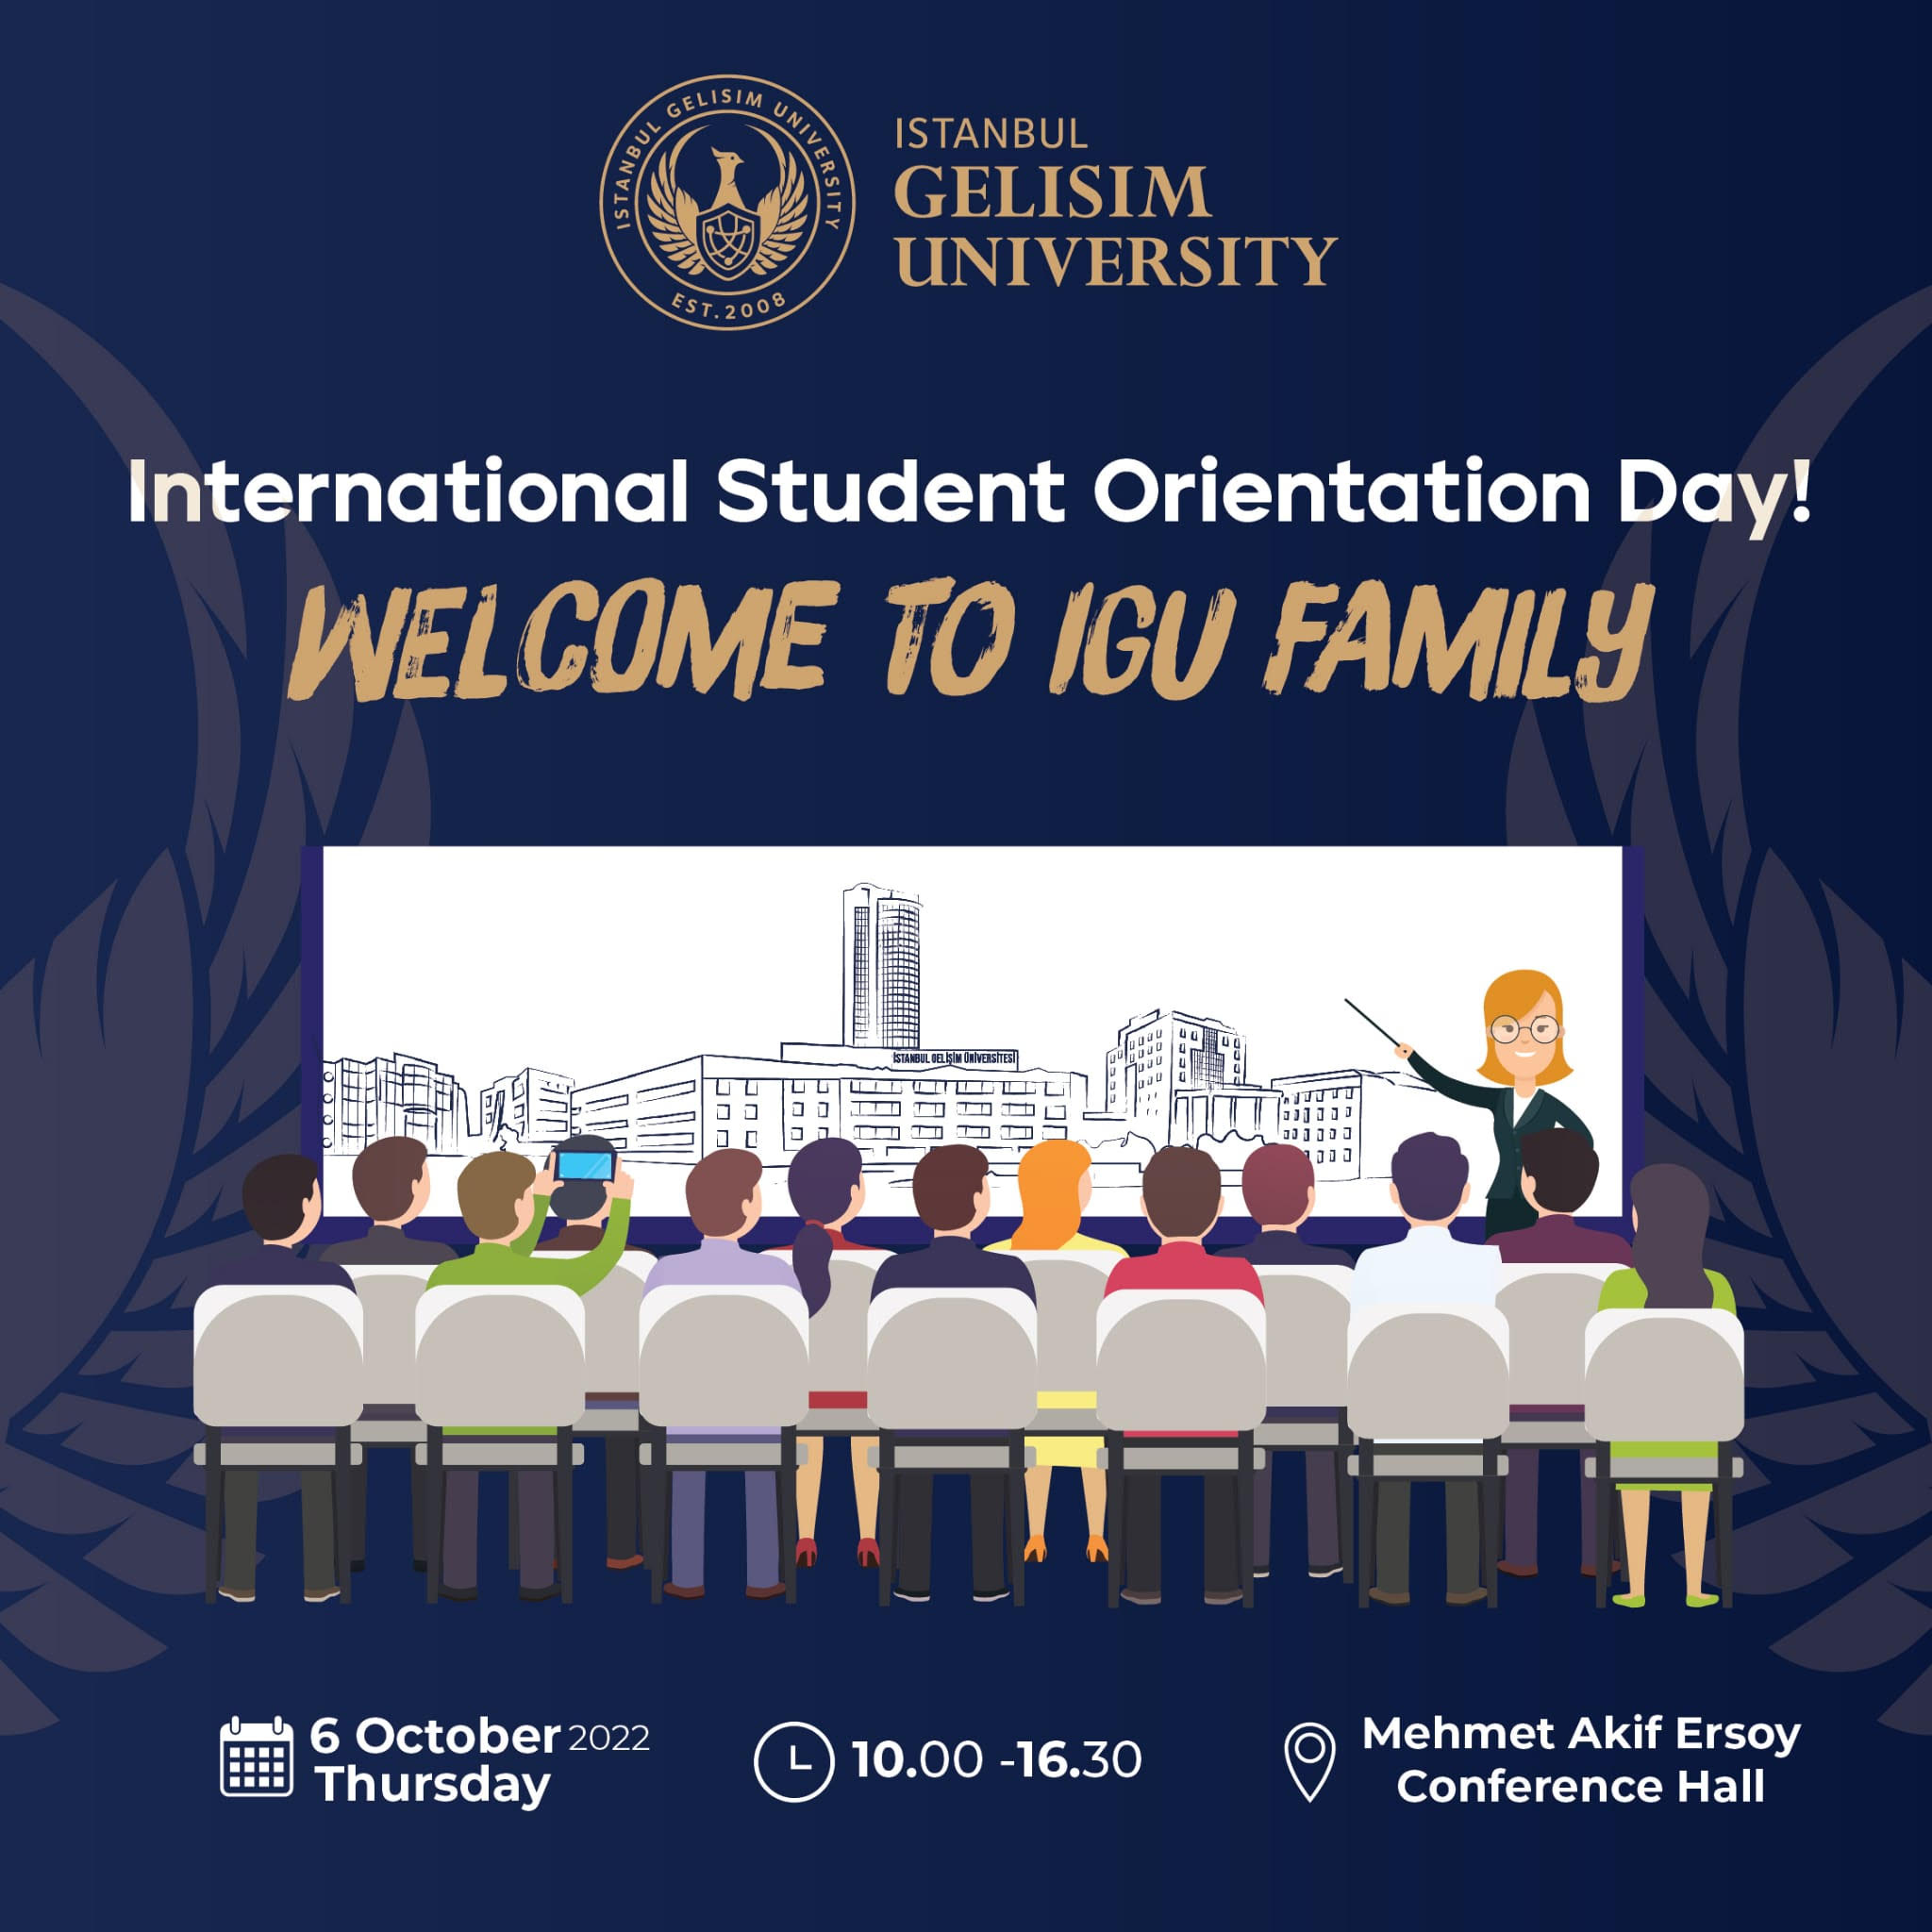 INTERNATIONAL STUDENTS ORIENTATION DAY